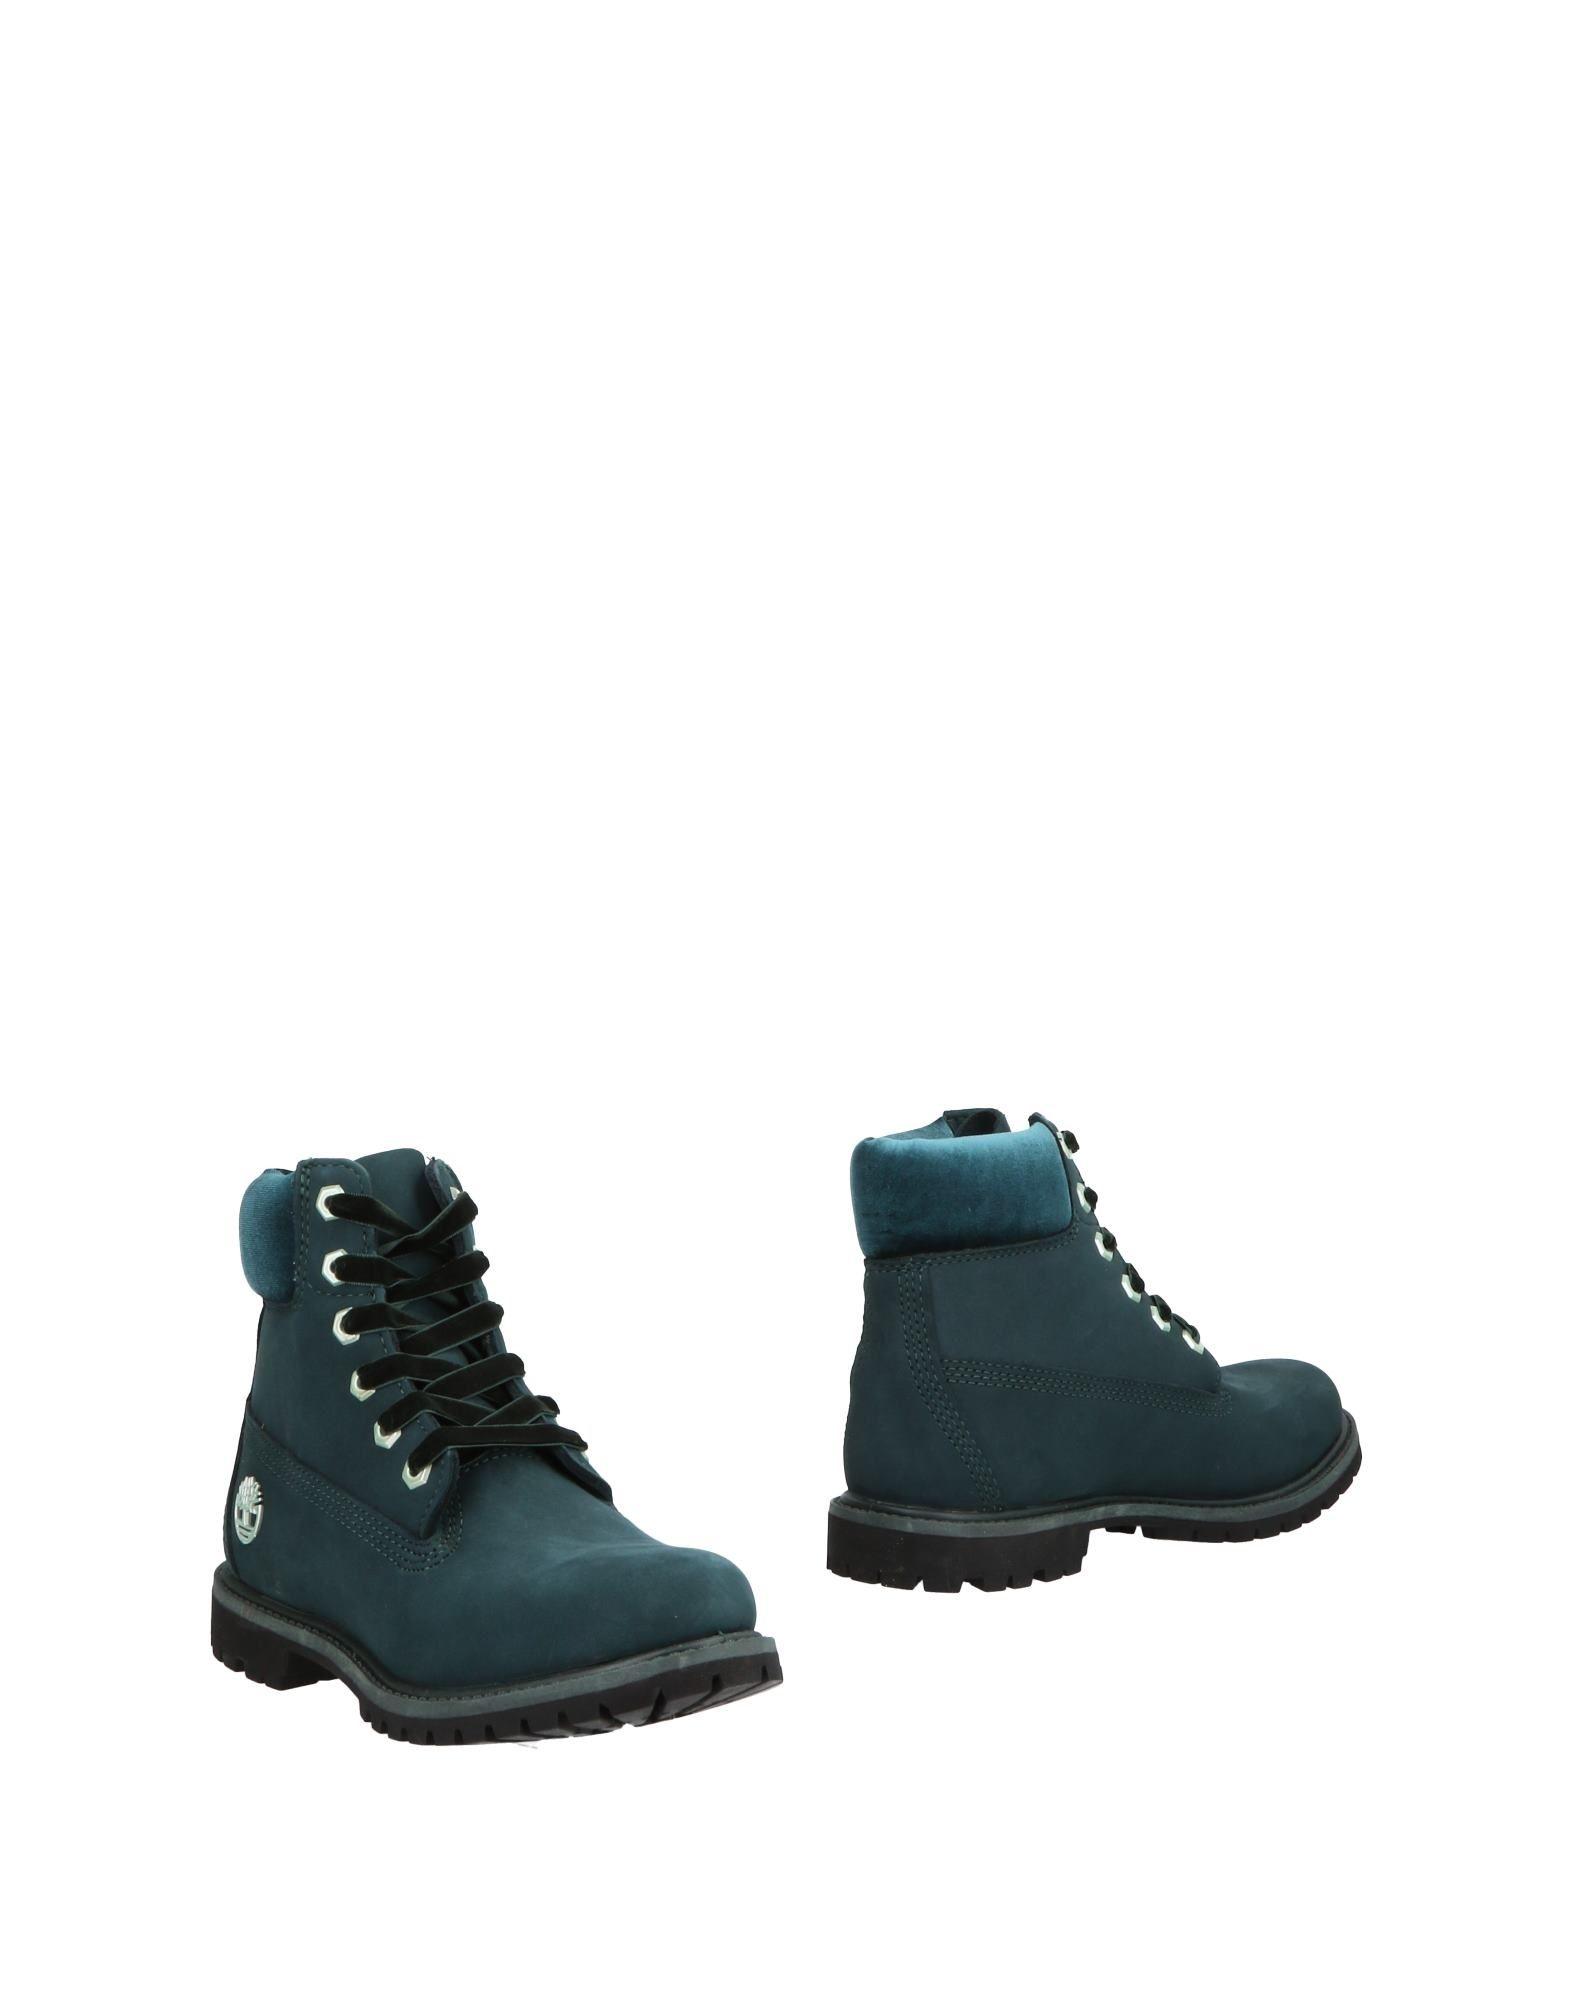 jade timberland boots